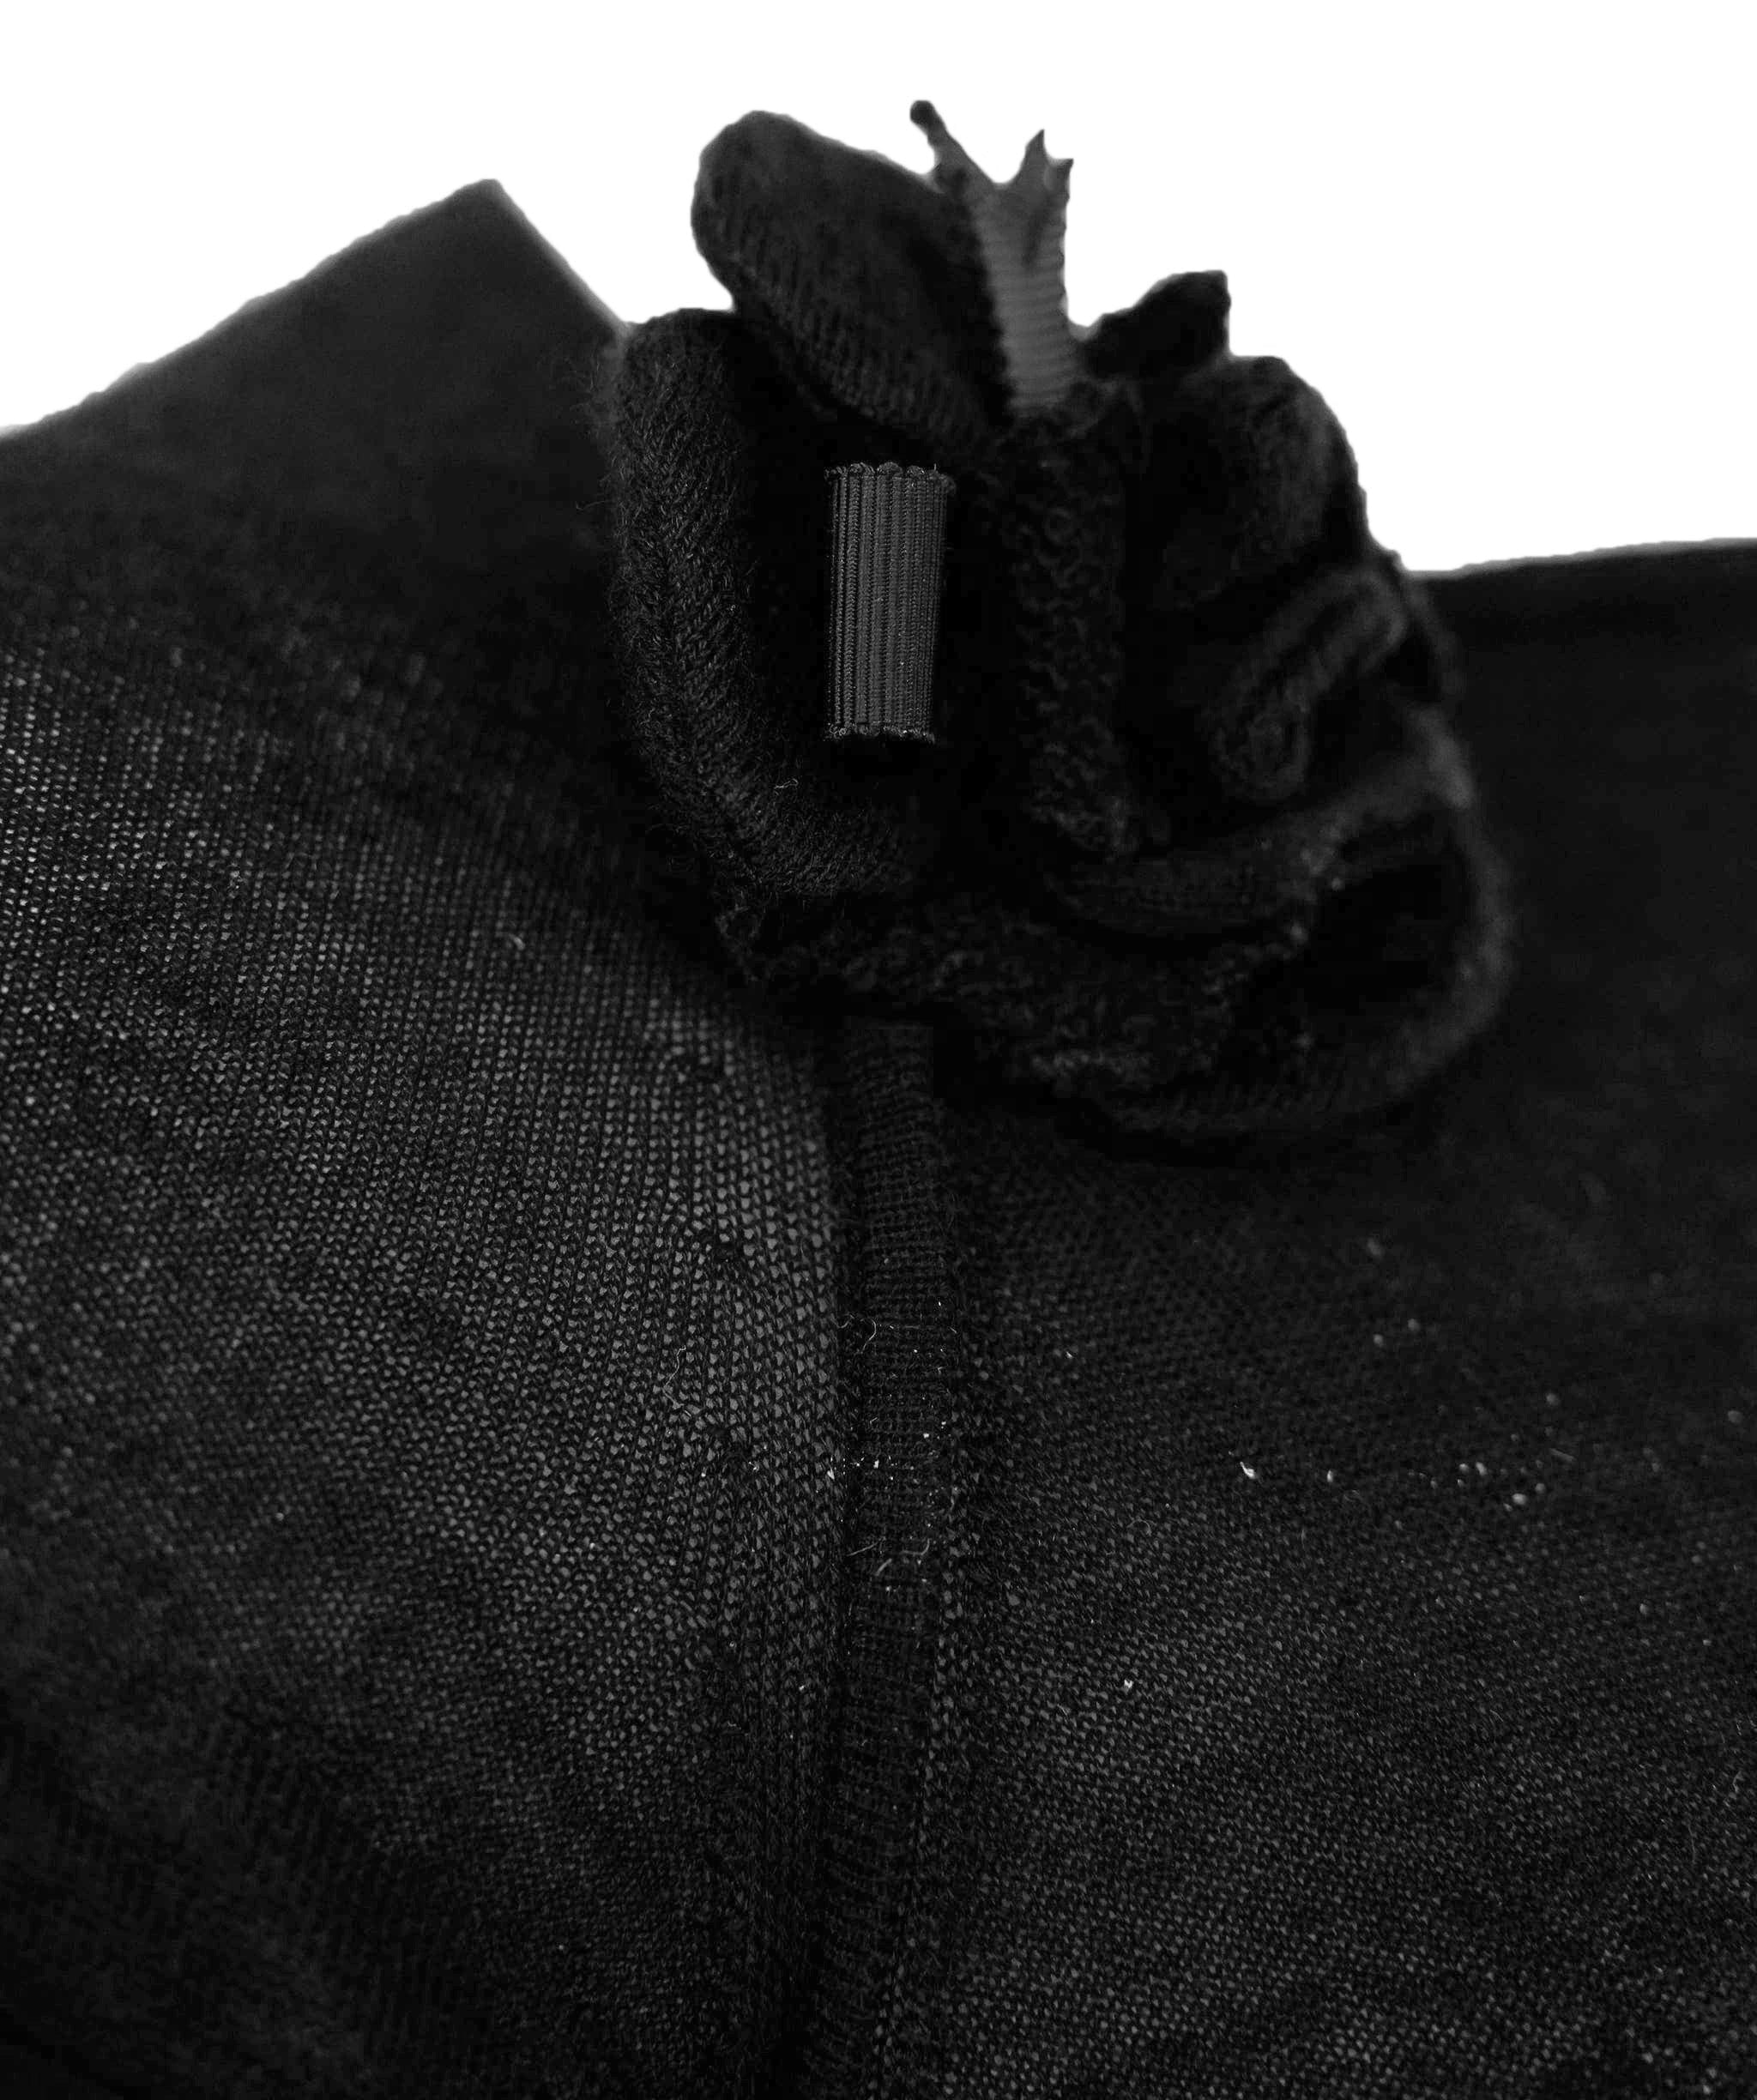 Chanel chanel black top AWL4513